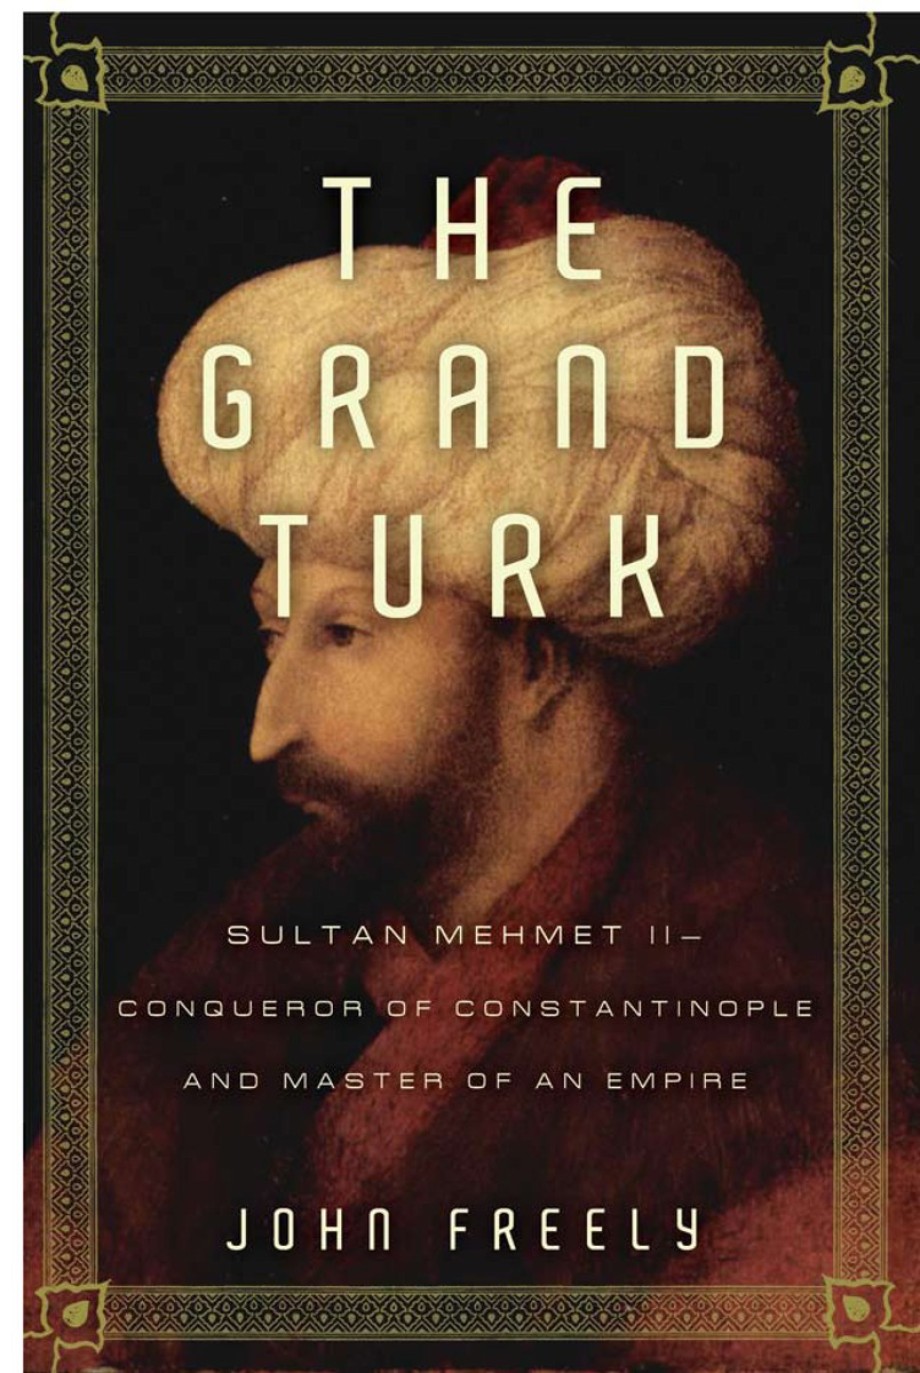 Grand Turk Sultan Mehmet II-Conqueror of Constantinople and Master of an Empire